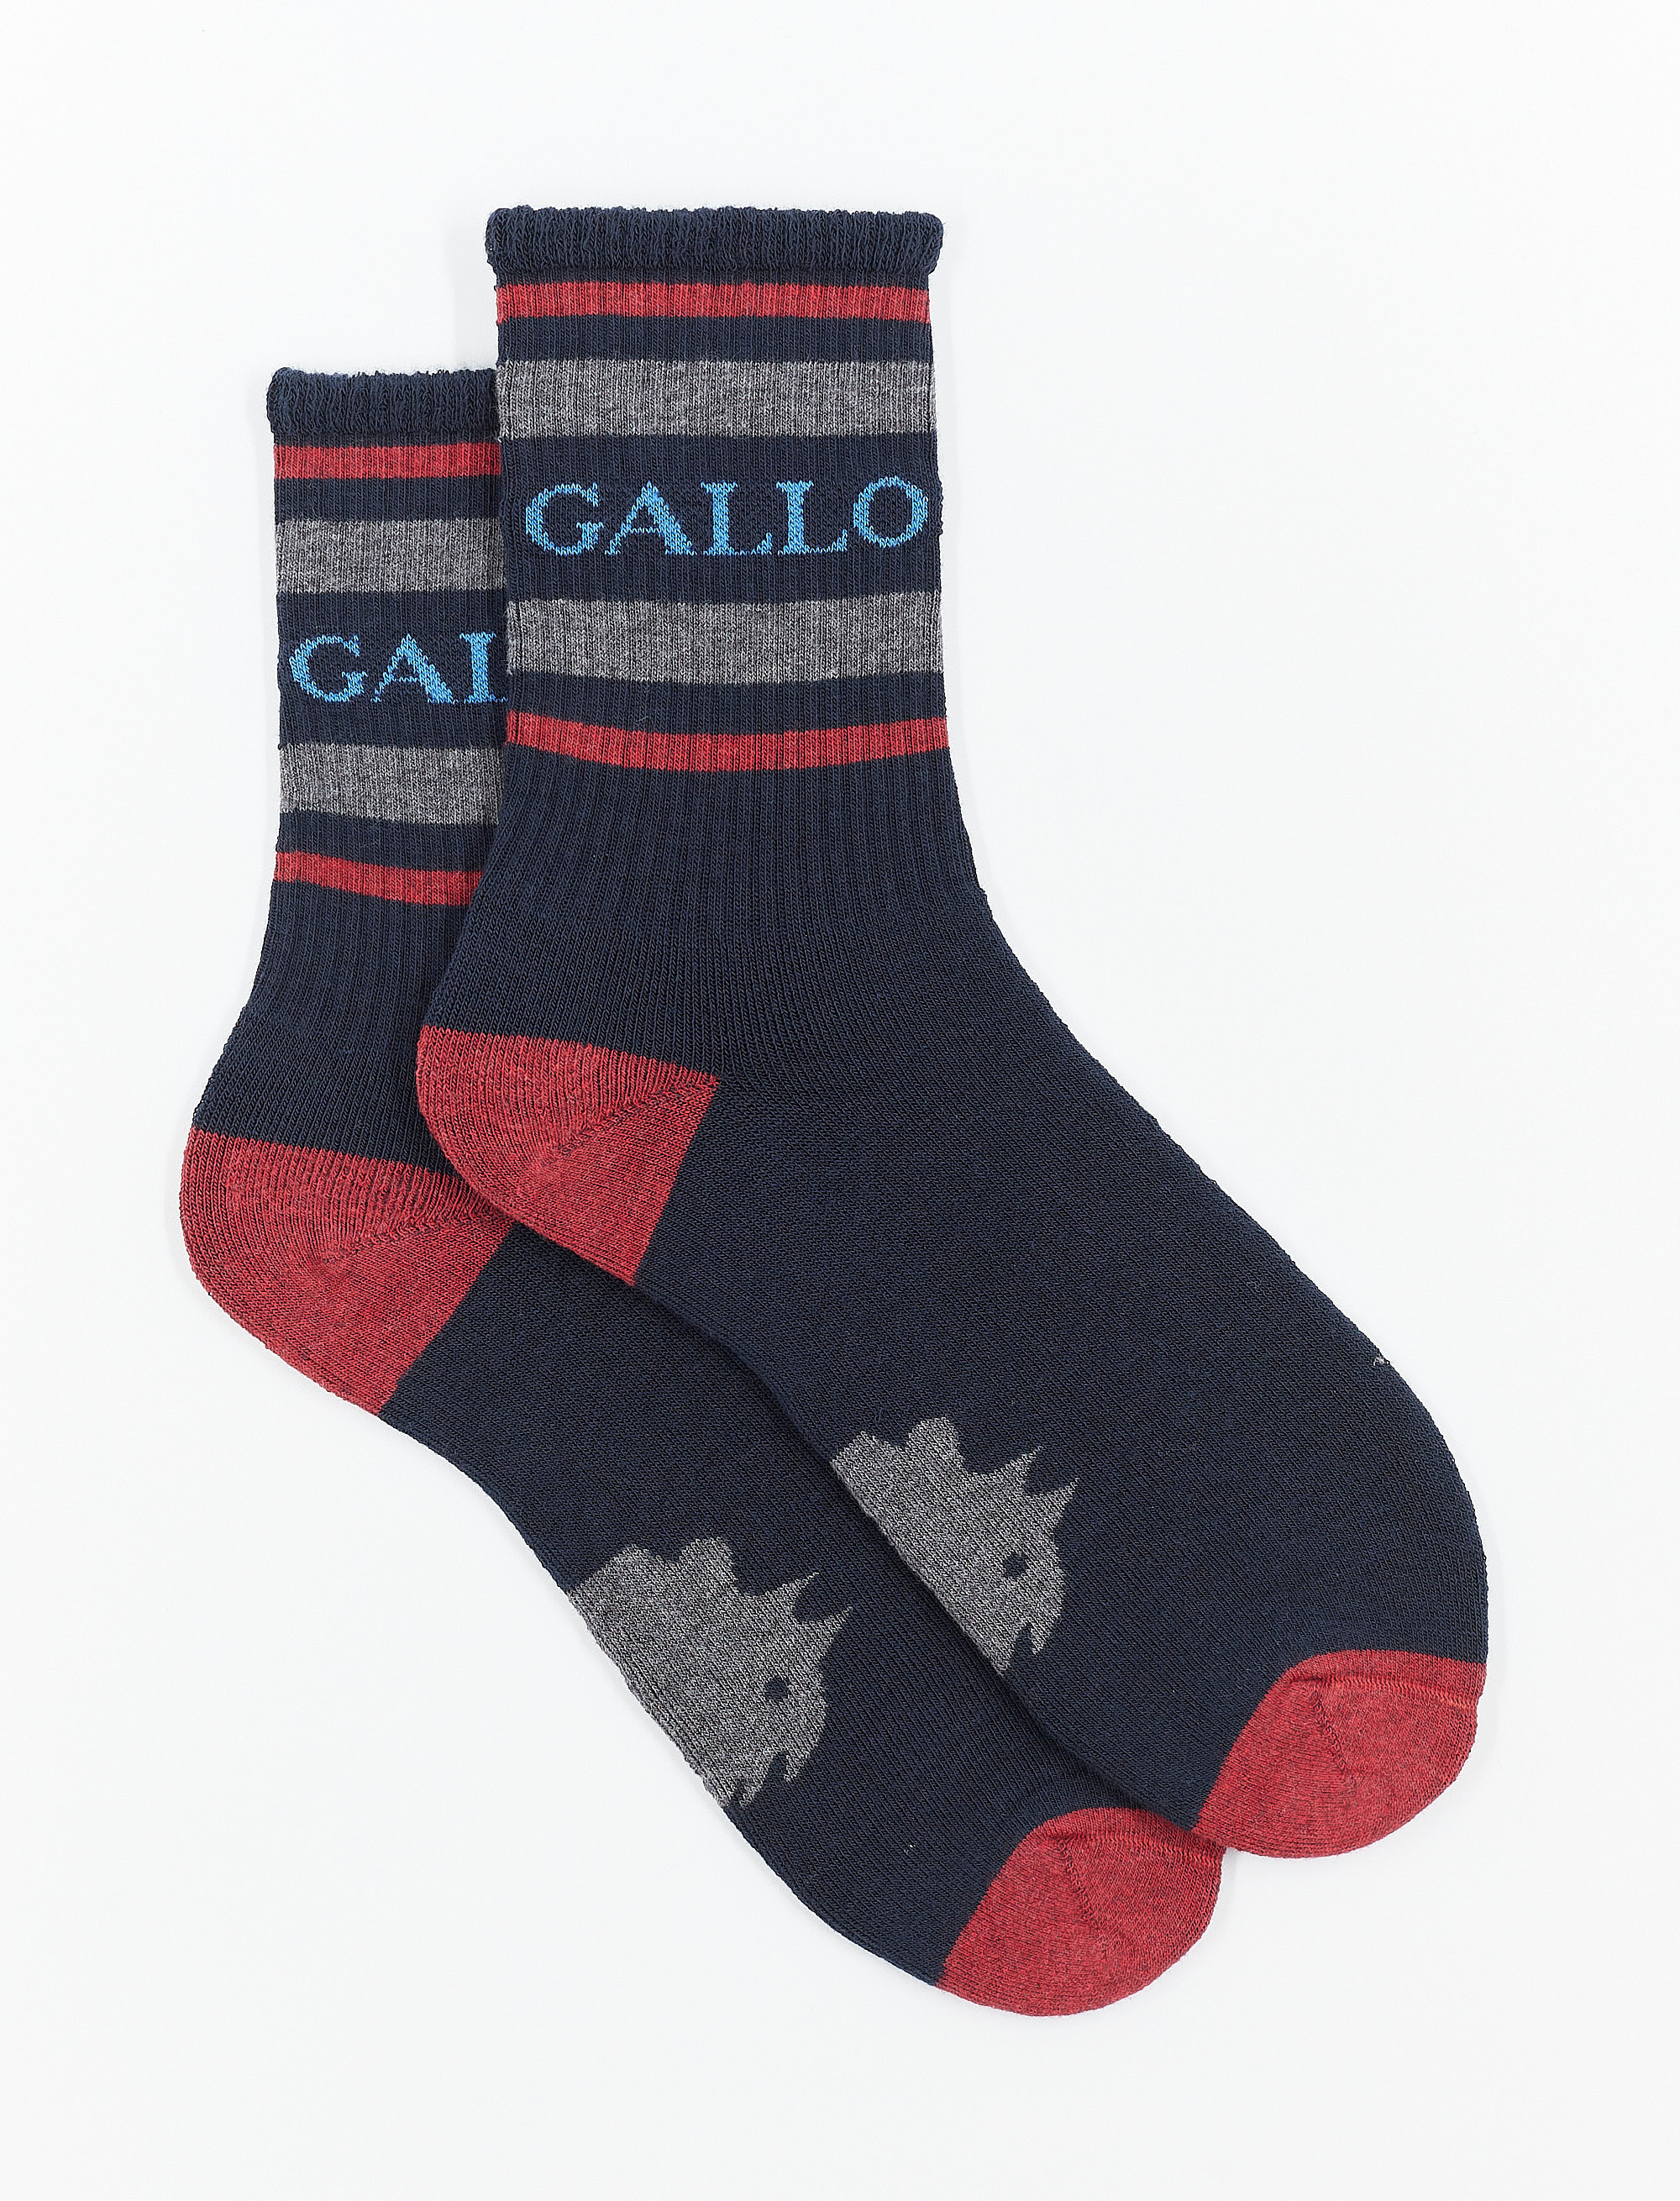 Men's short navy blue cotton terry cloth socks with Gallo writing | Gallo